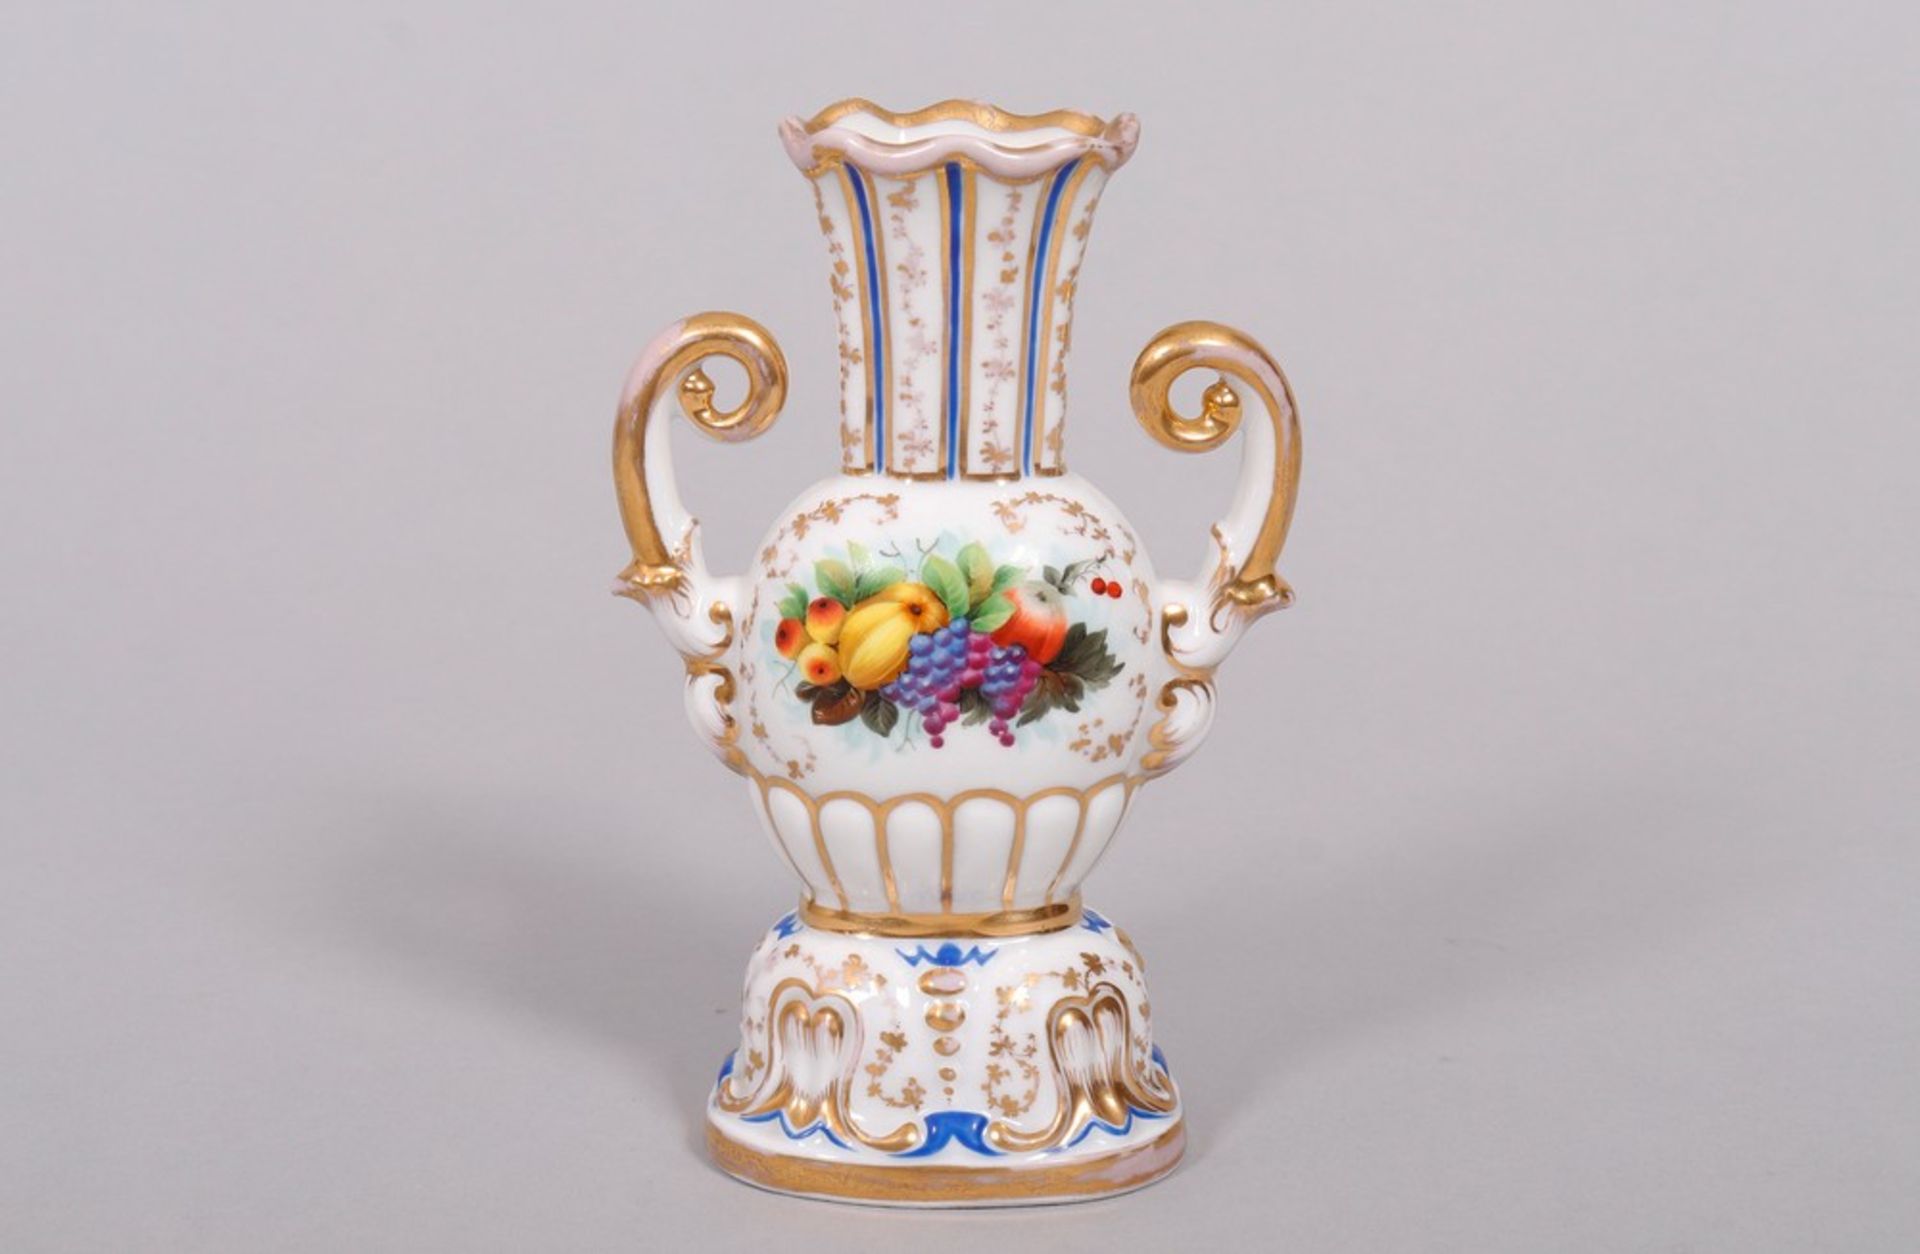 Small Biedermeier vase, probably Sèvres, c. 1837 - Image 2 of 6